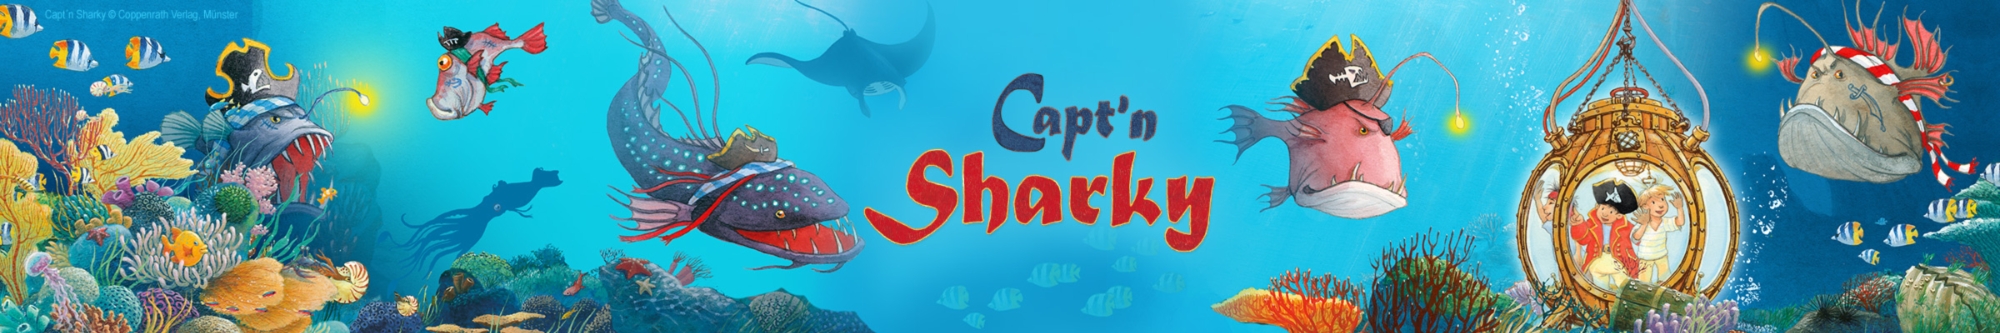 Showroom - Captn Sharky